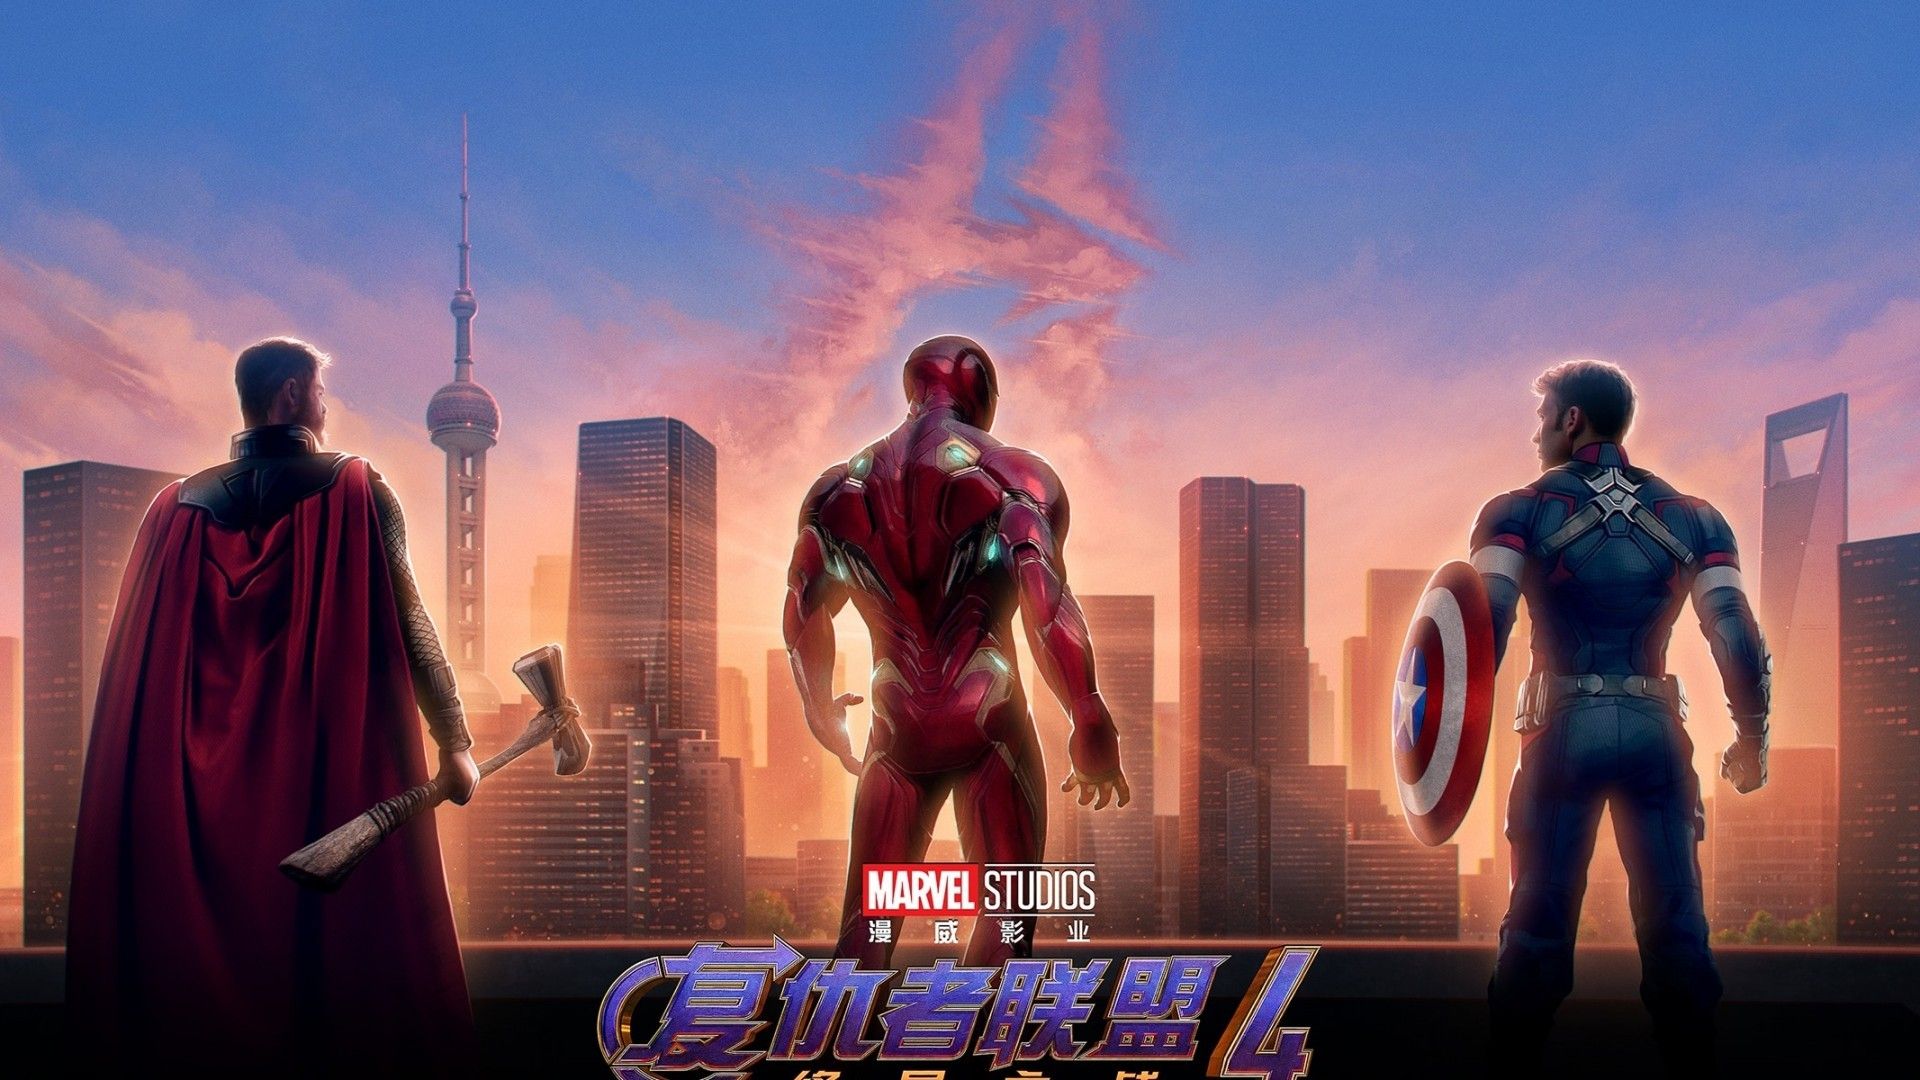 Download 1920x1080 Avengers: Endgame, Shanghai, Poster, Iron Man